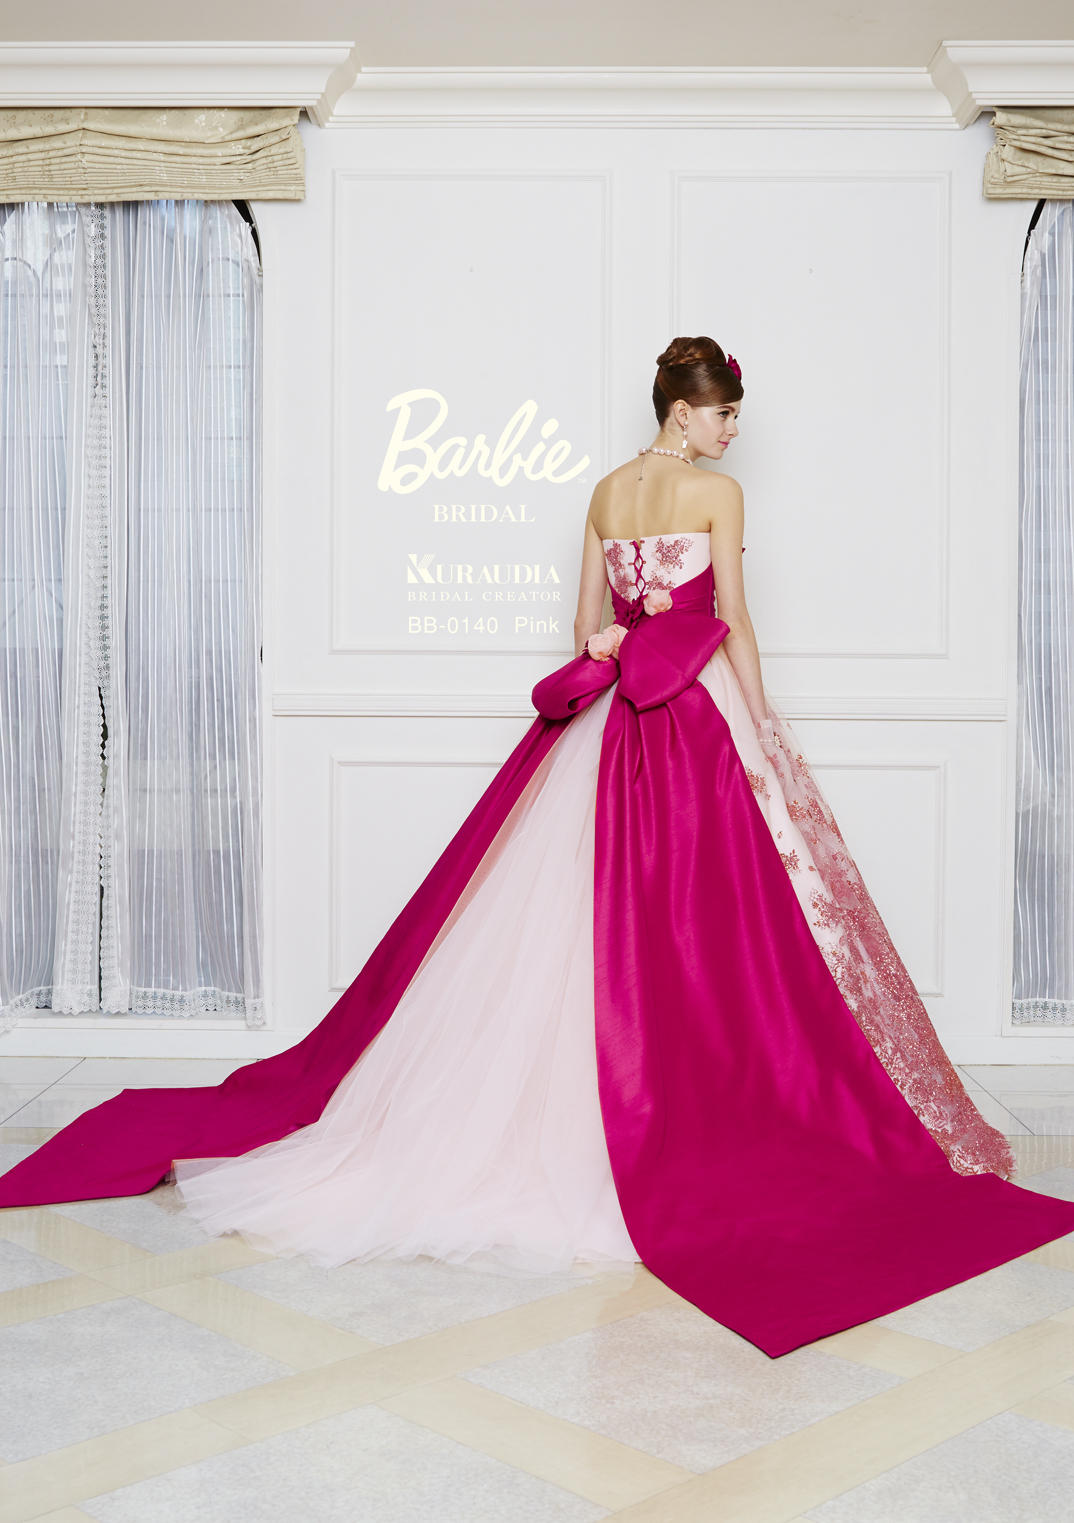 Barbieの新作カラードレス入荷 partⅢ | ウエディングドレス レンタル 